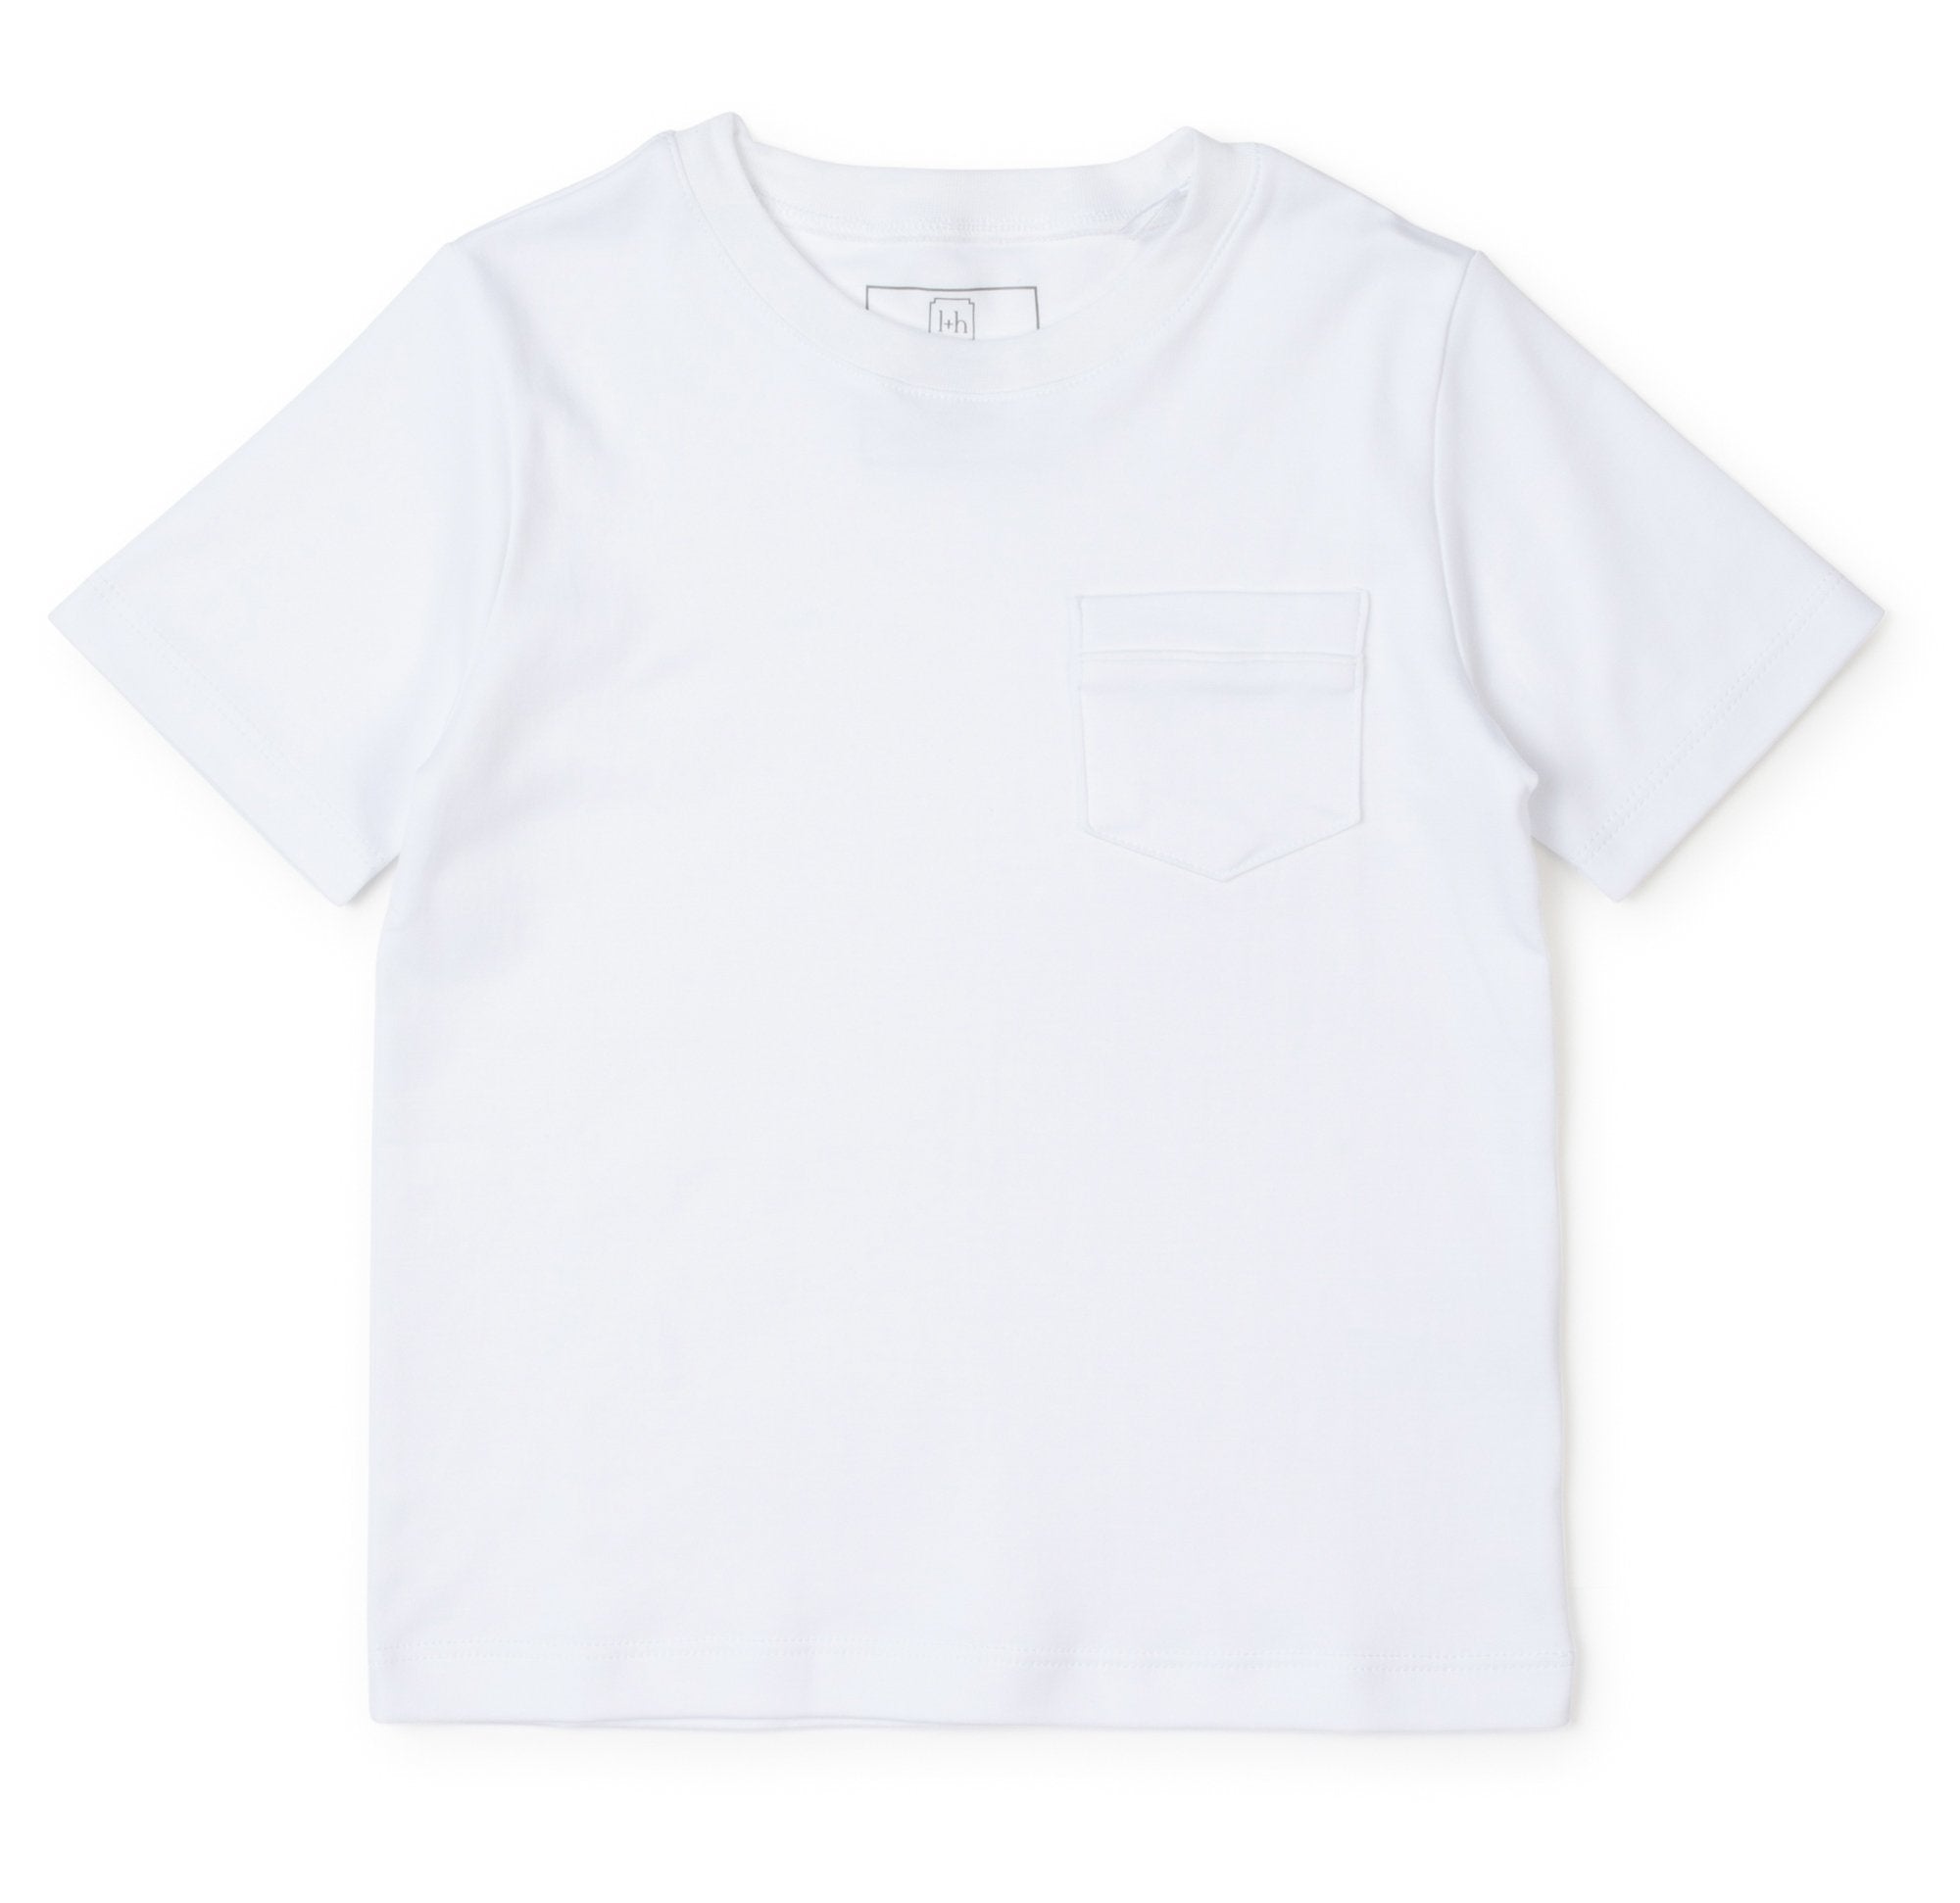 Charles Boys' Pima Cotton Pocket T-shirt - White